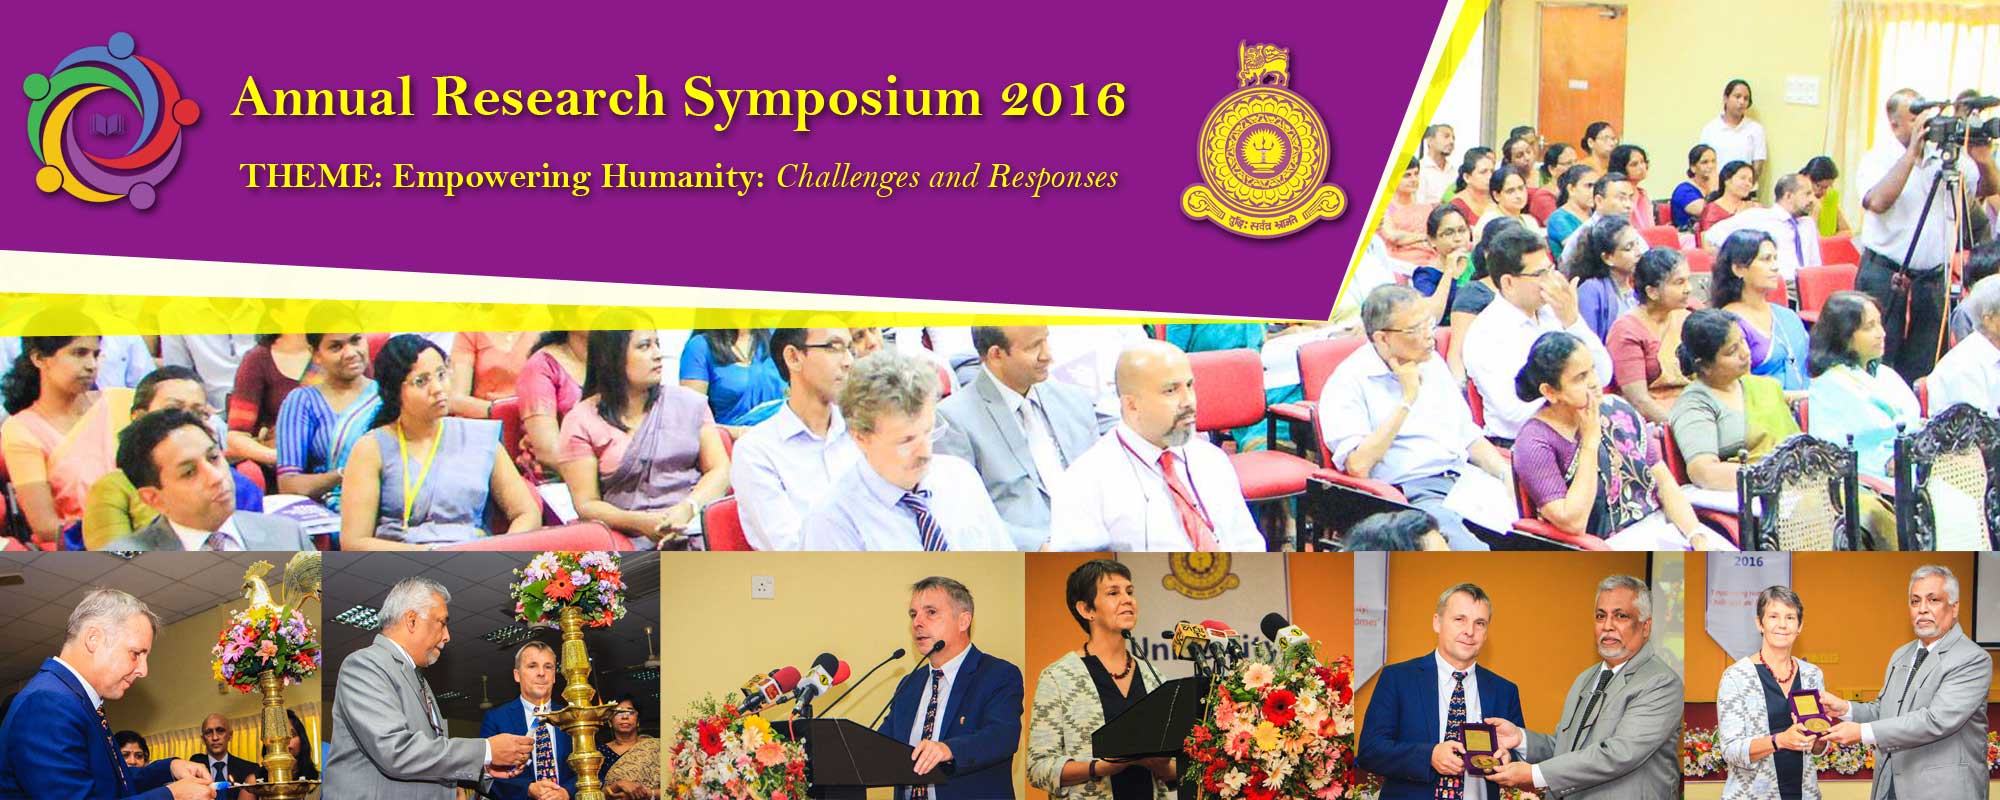 Annual Research Symposium 2016